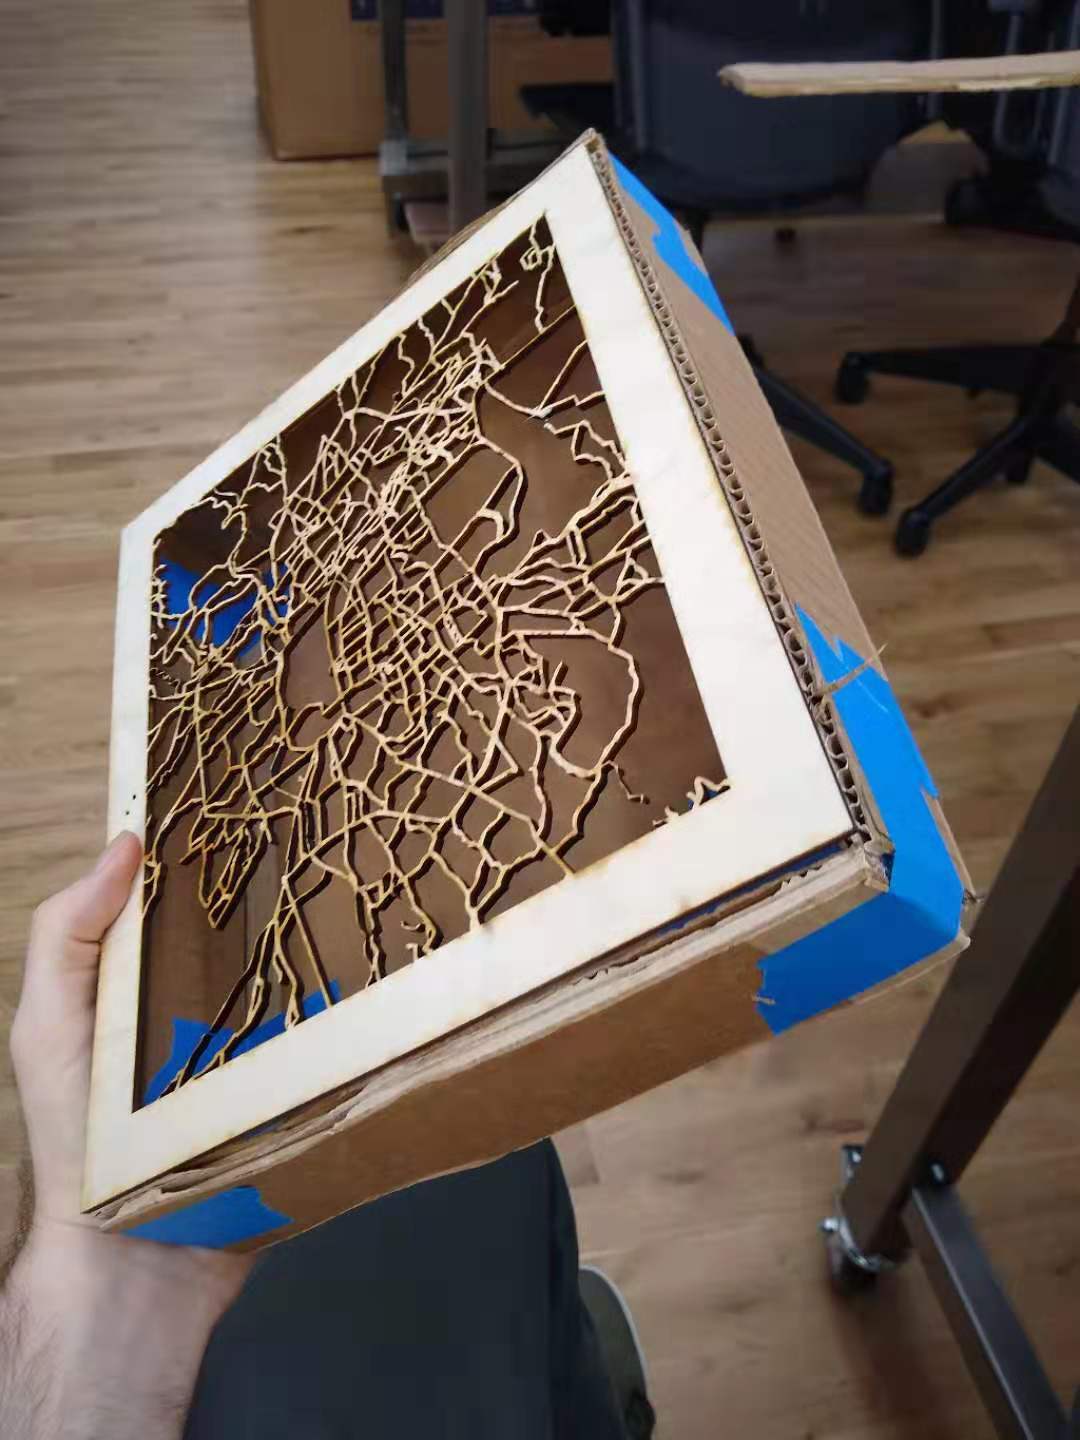 A lasercut city map on top of a cardboard box.